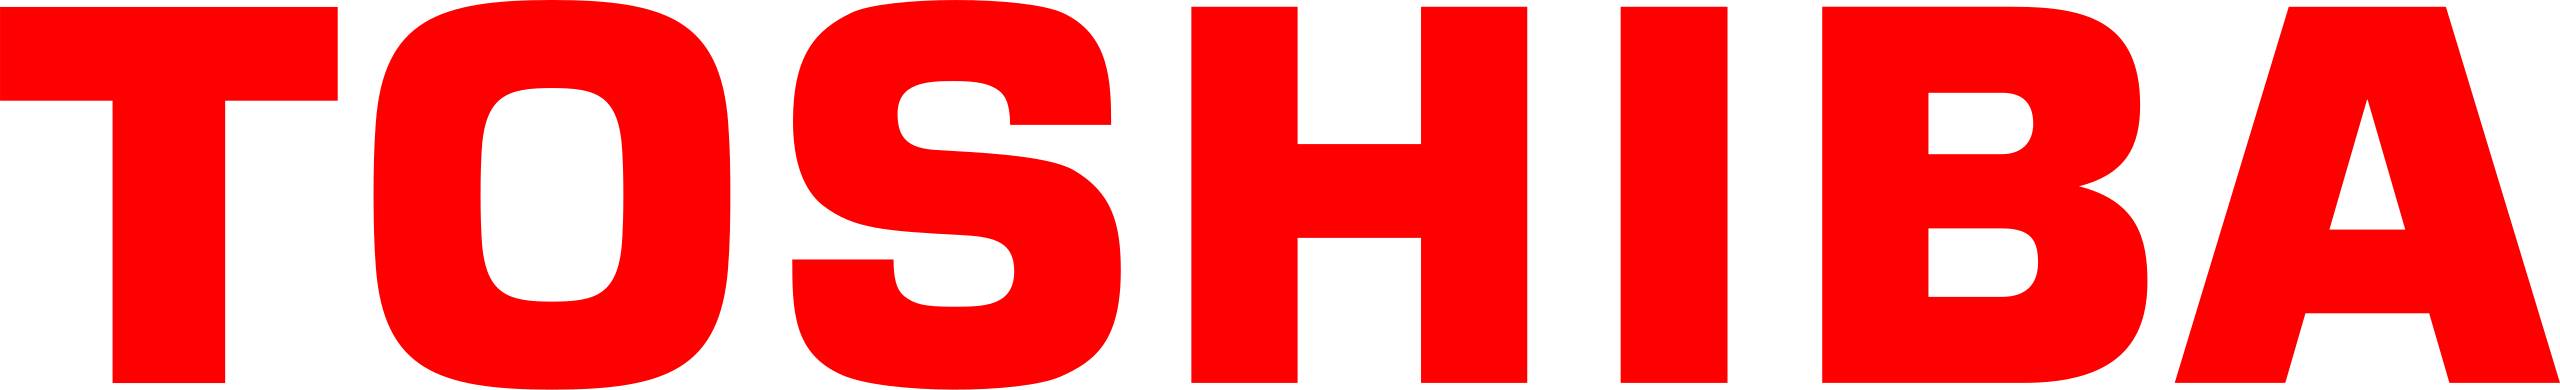 2560px-Toshiba_logo.svg.png